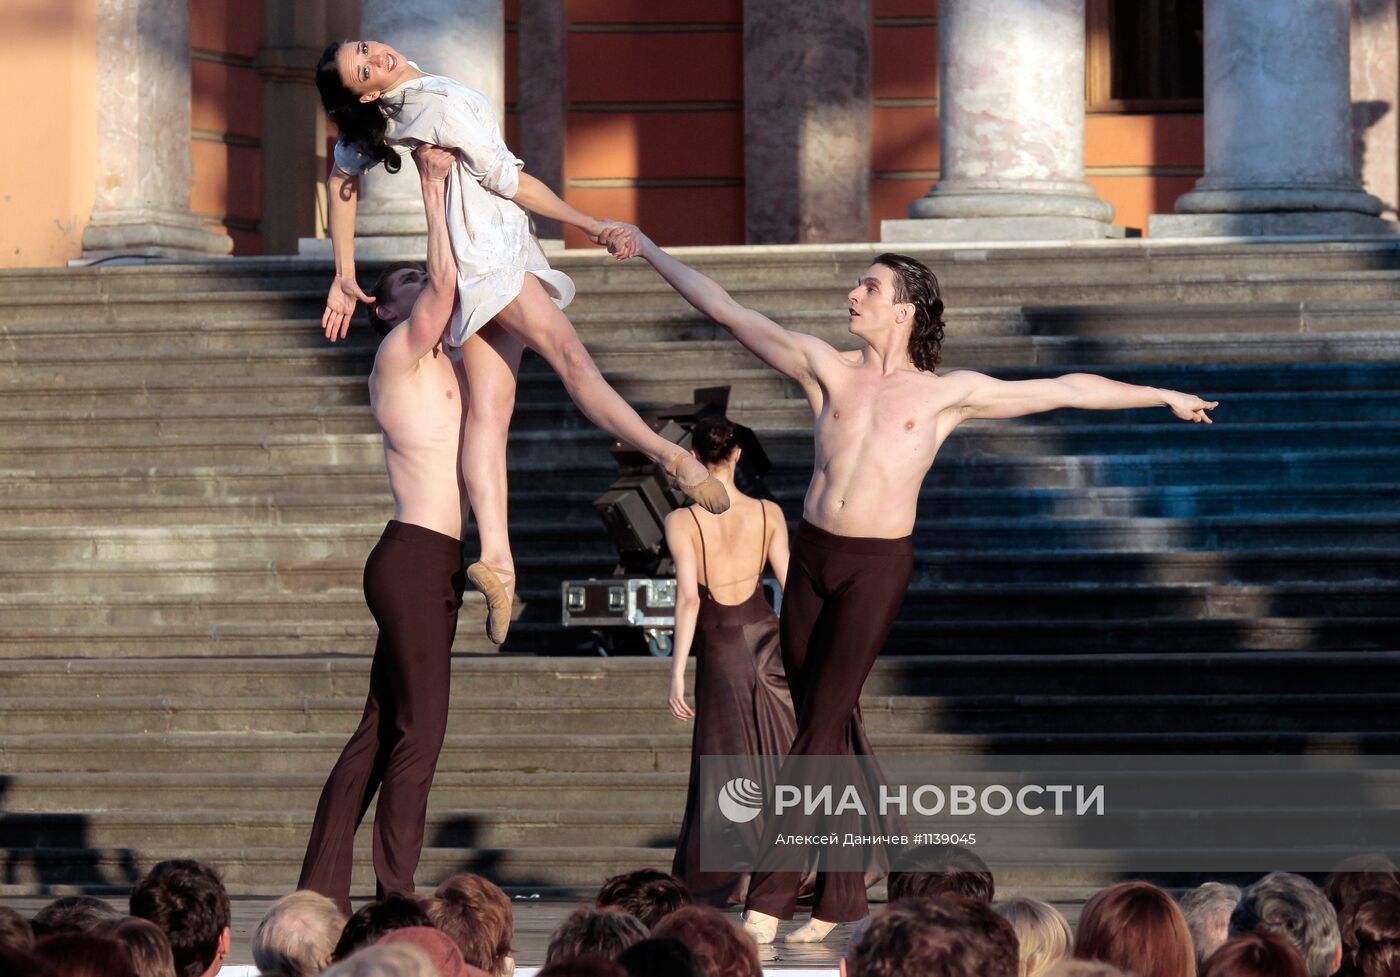 Гала-концерт "Борис Эйфман и звезды балета"